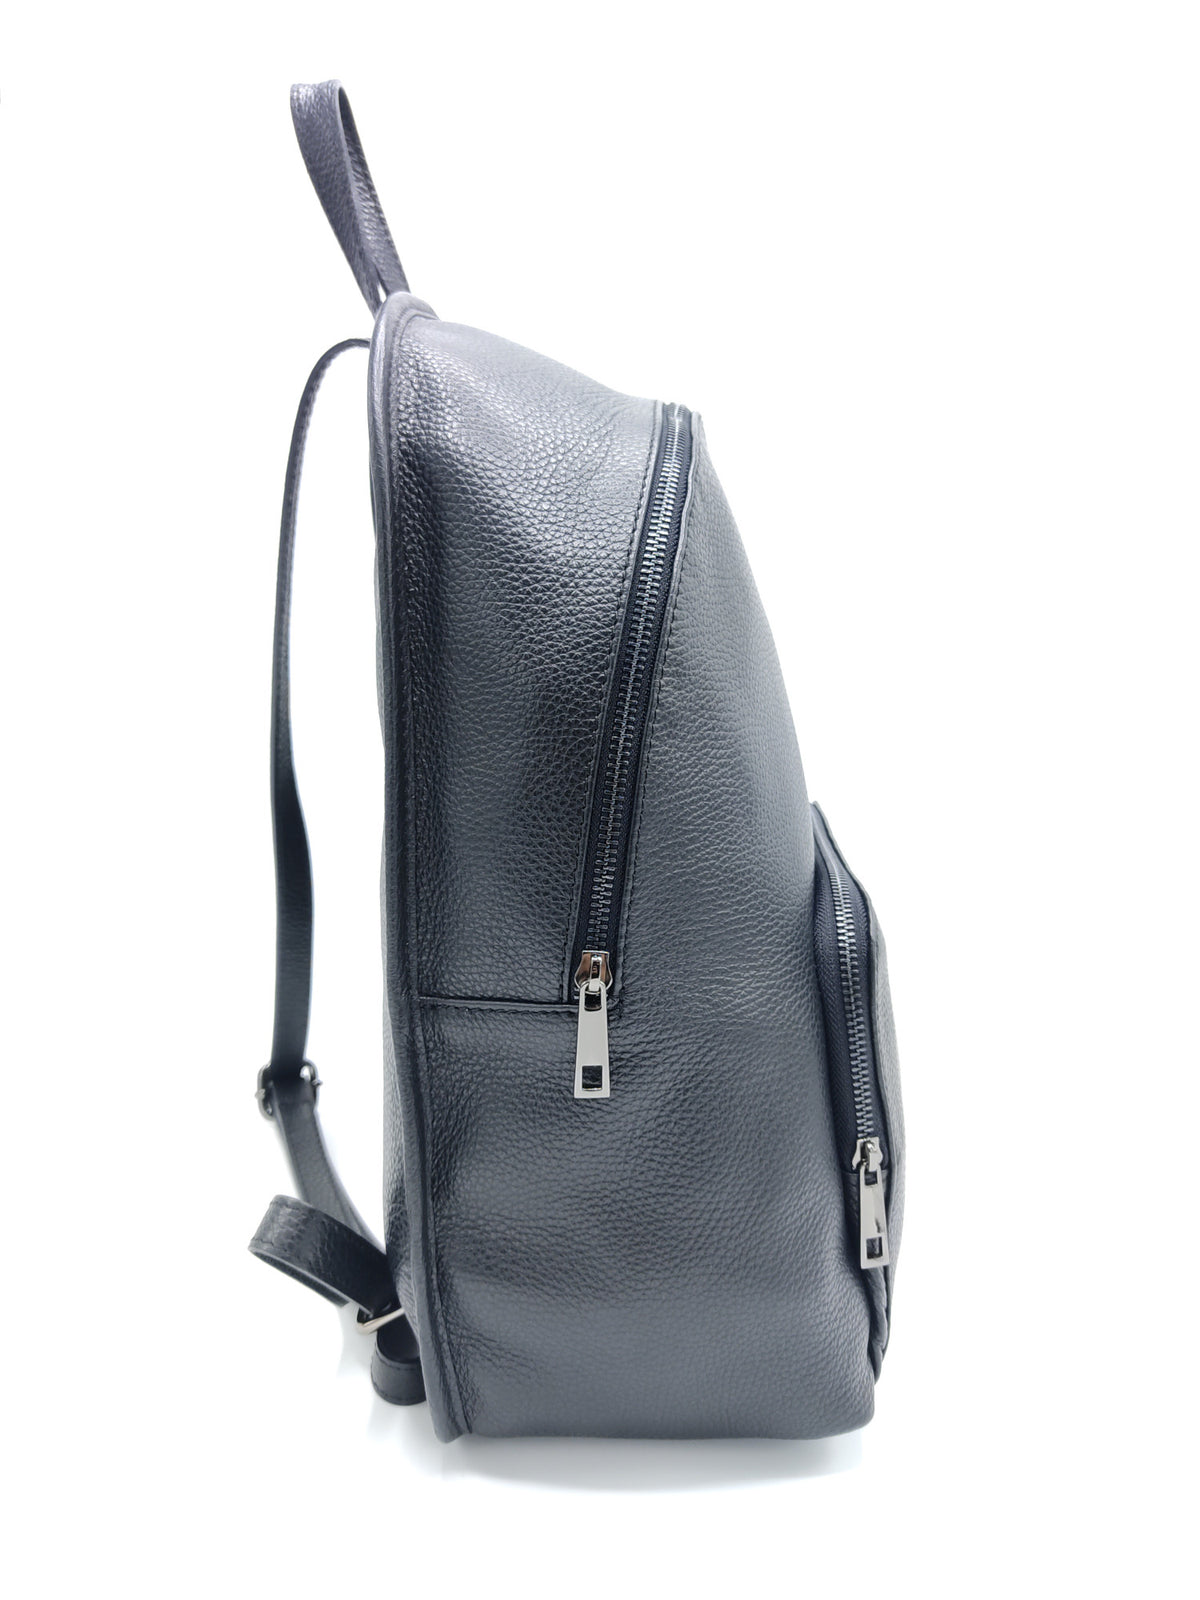 Tumbled leather backpack art. 112293